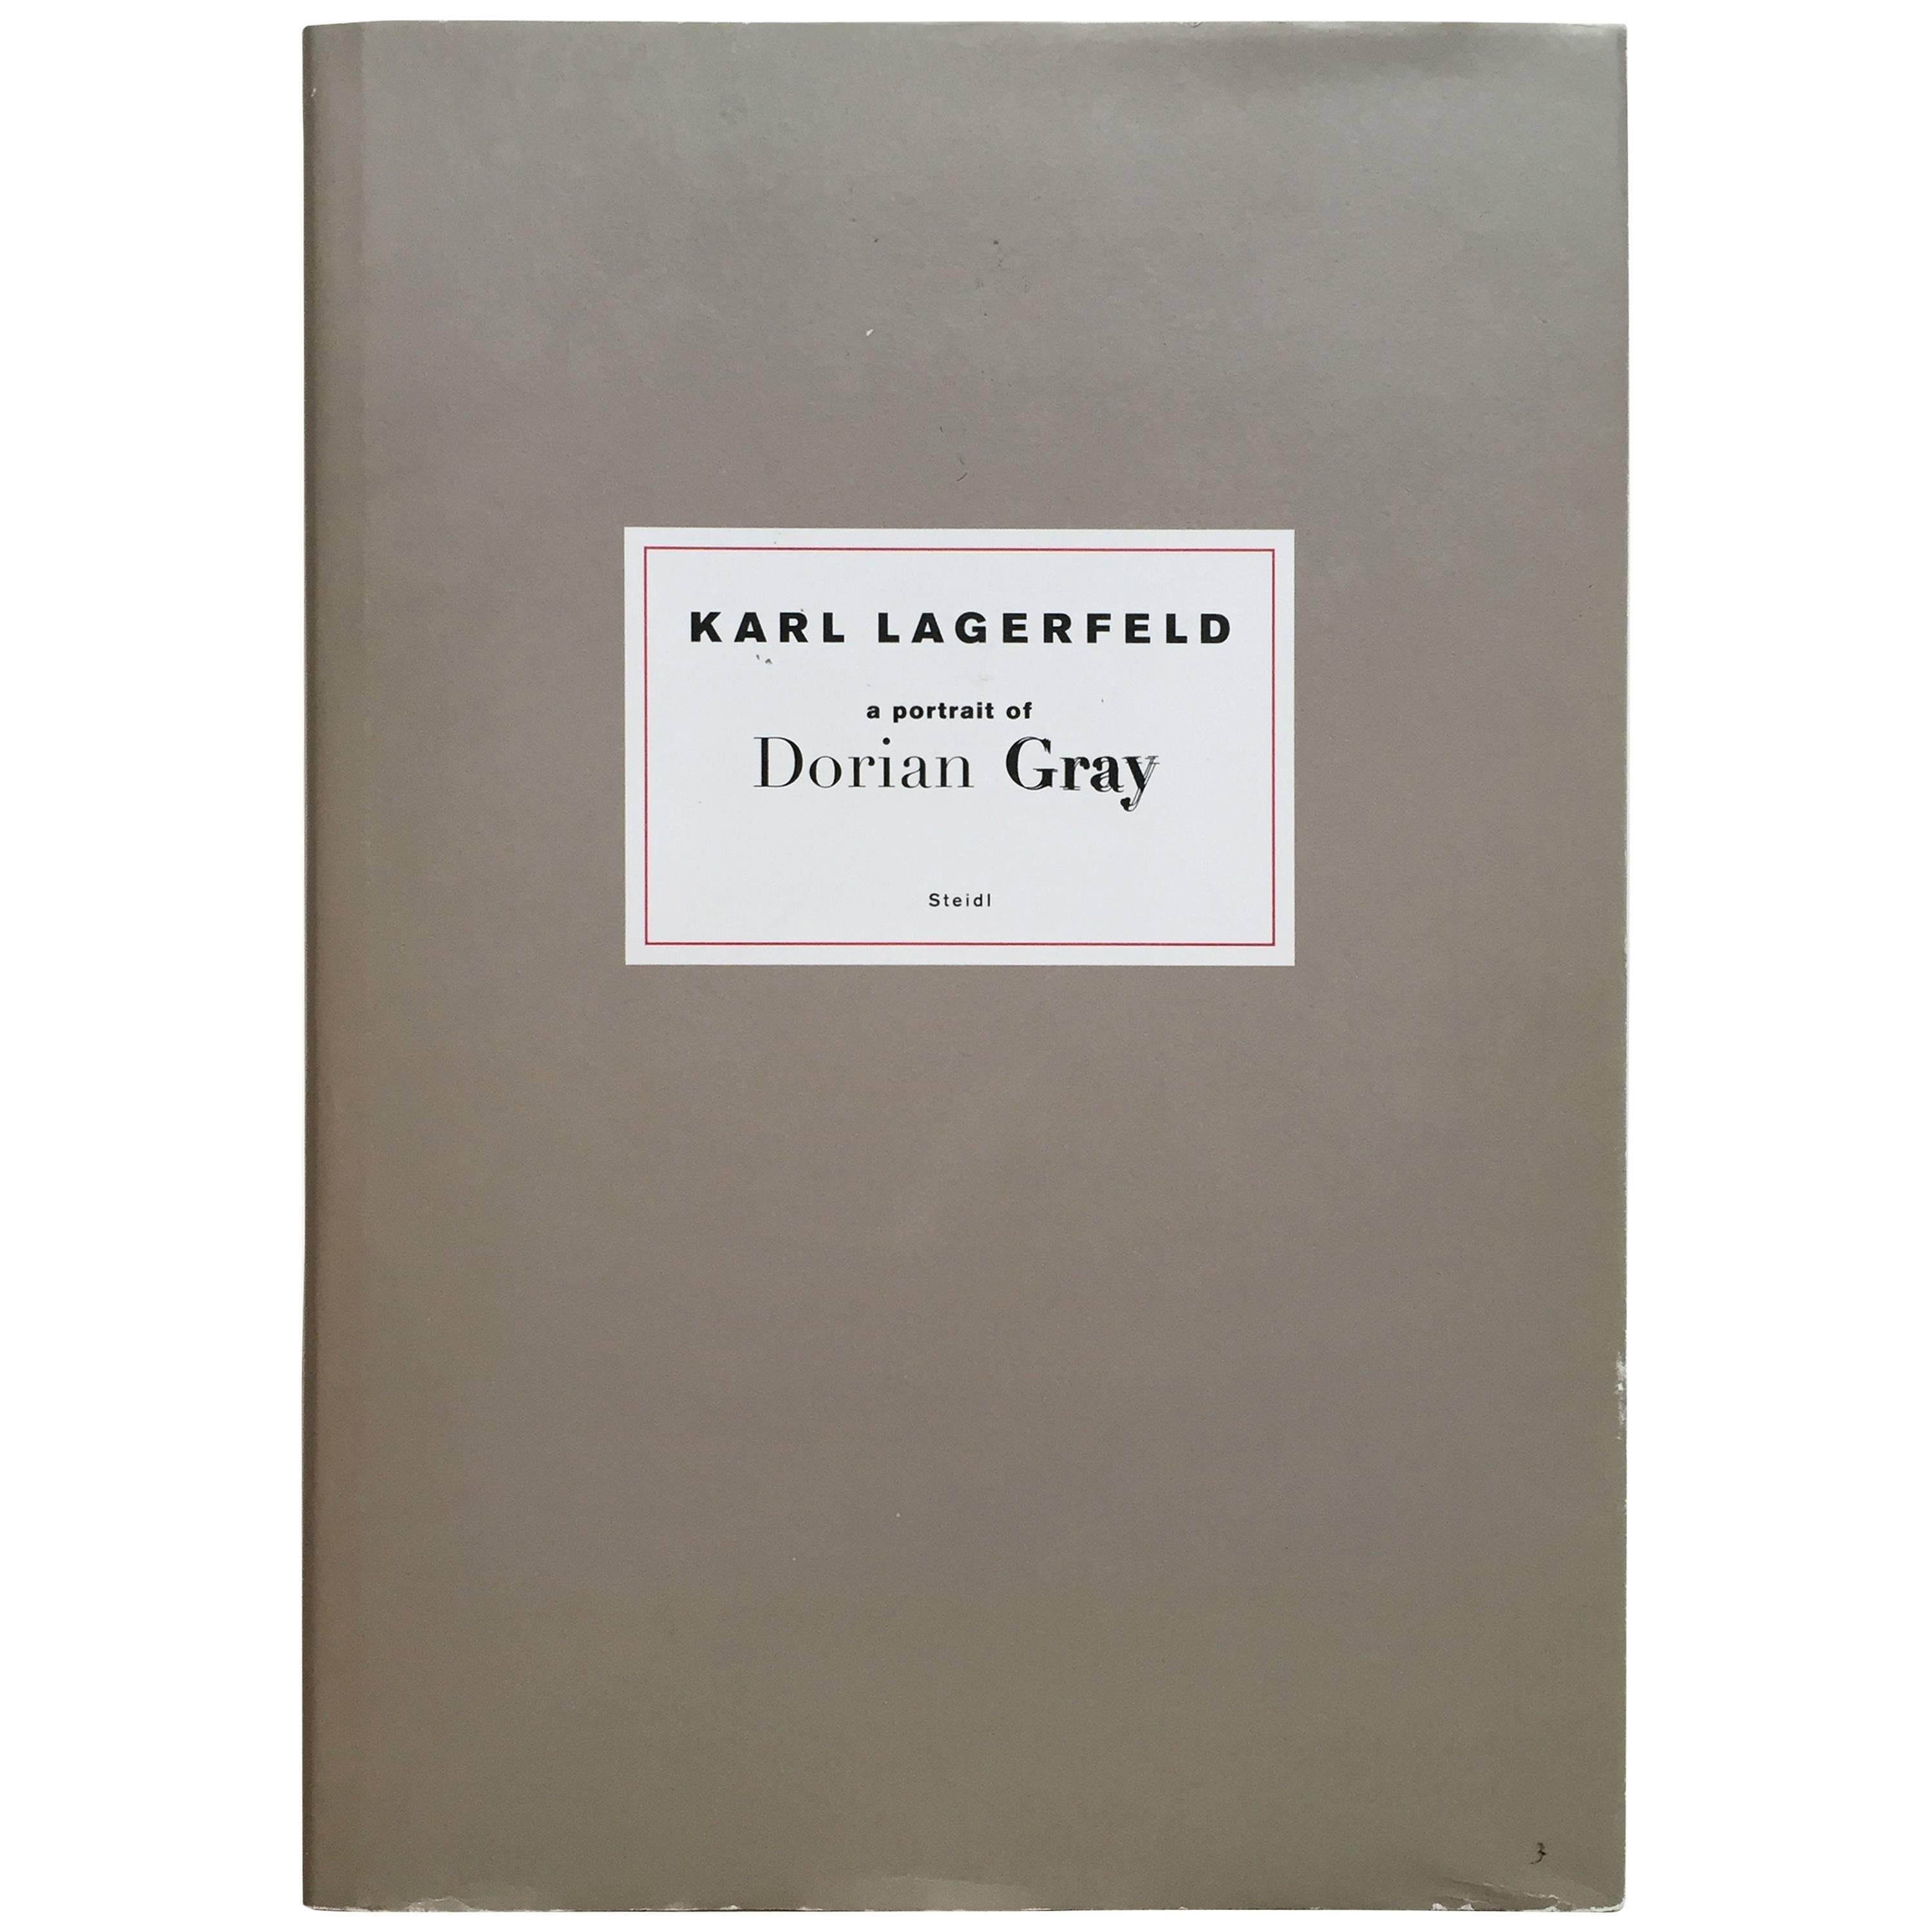 Karl Lagerfeld – A Portrait of Dorian Gray